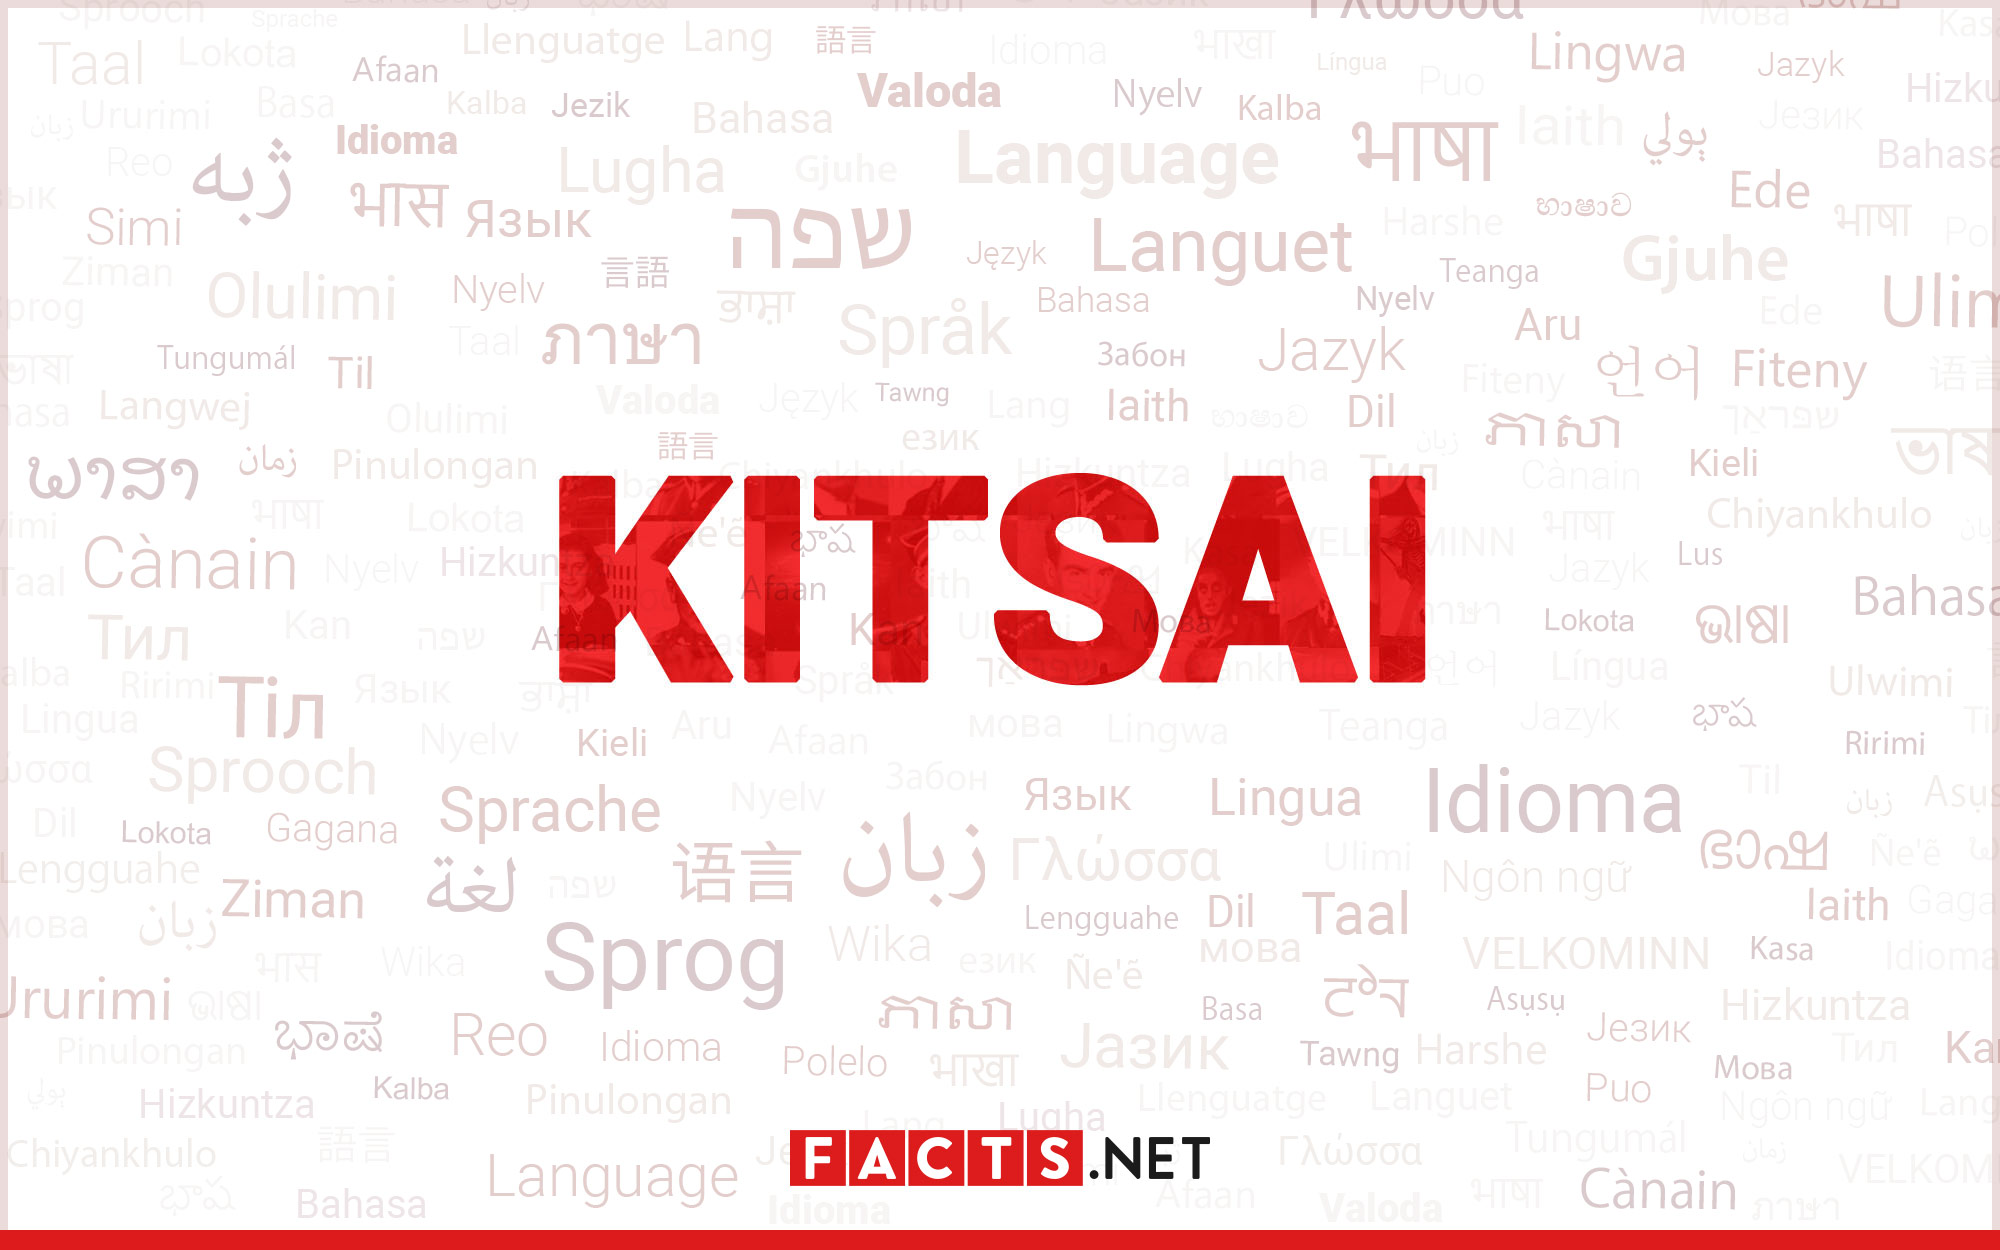 11-captivating-facts-about-kitsai